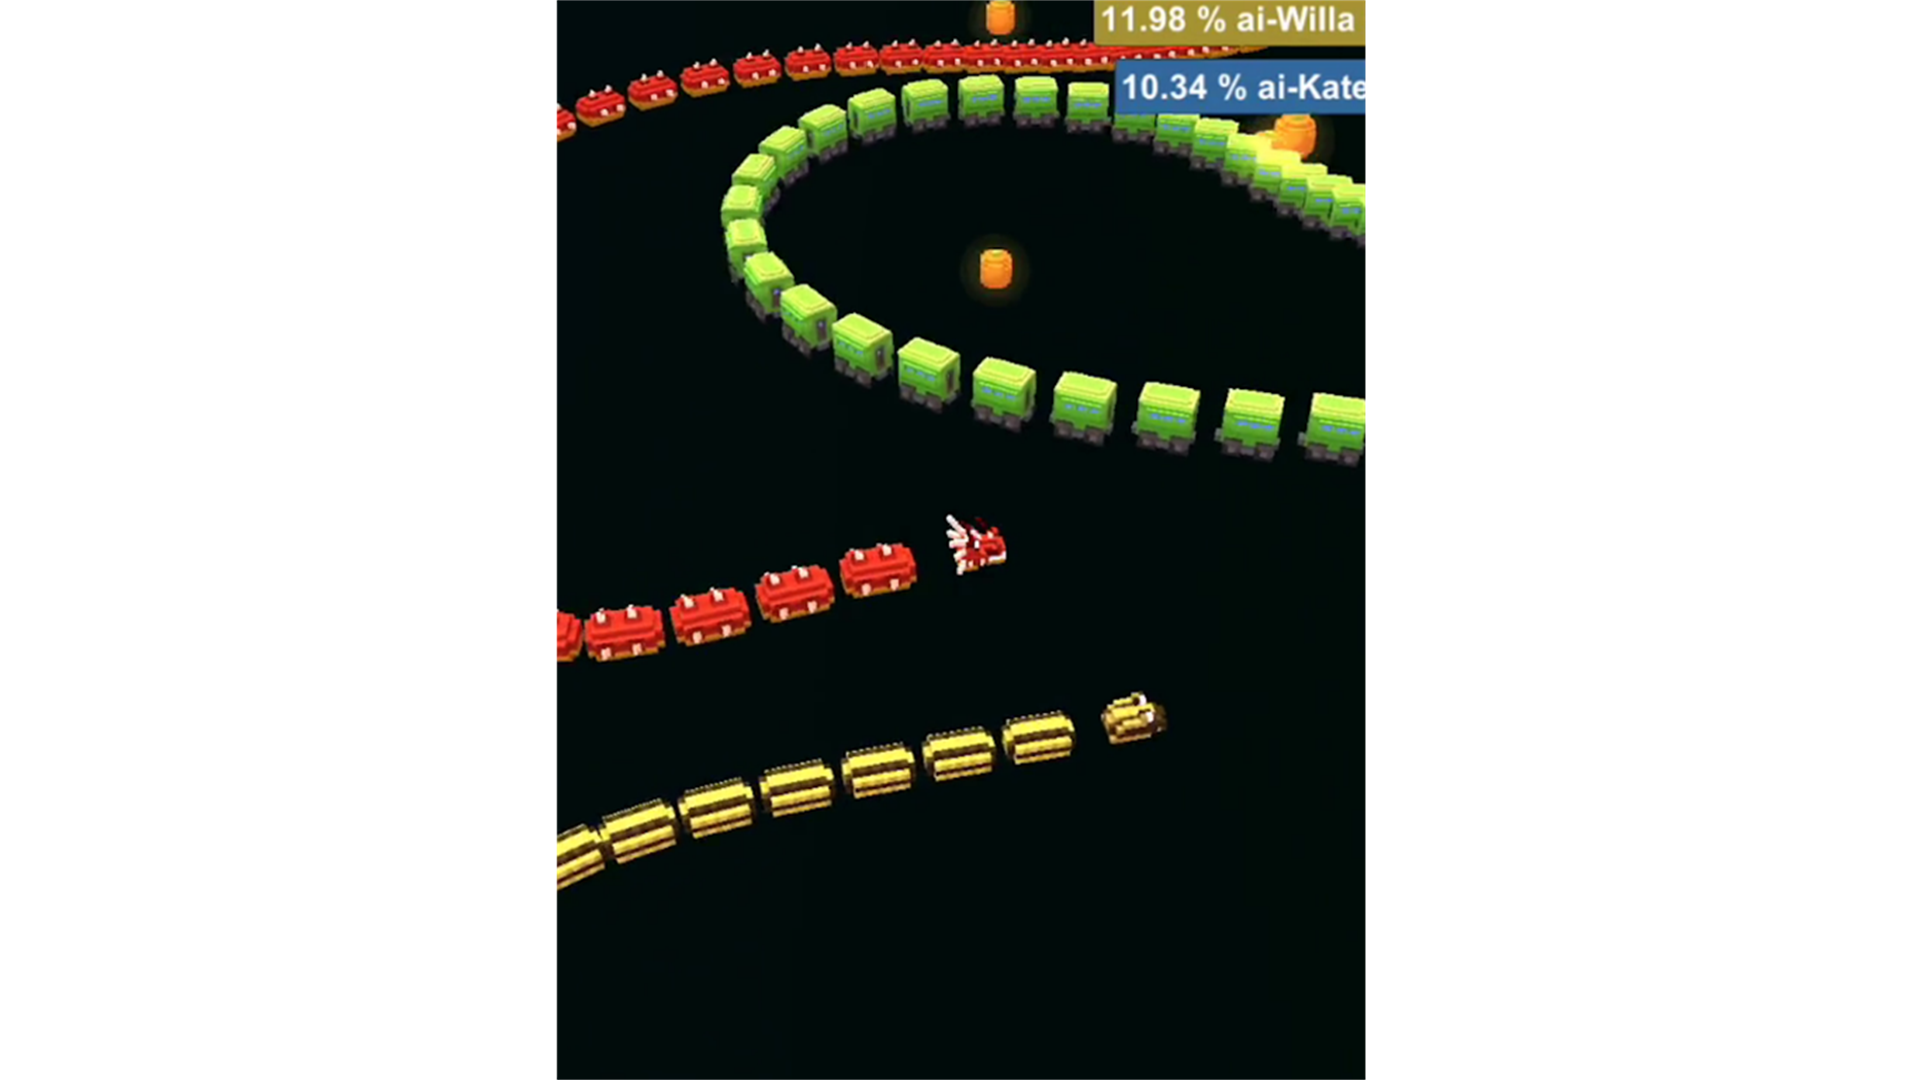 Sneak io - Worm/Snake slither .io games – Microsoft-apper